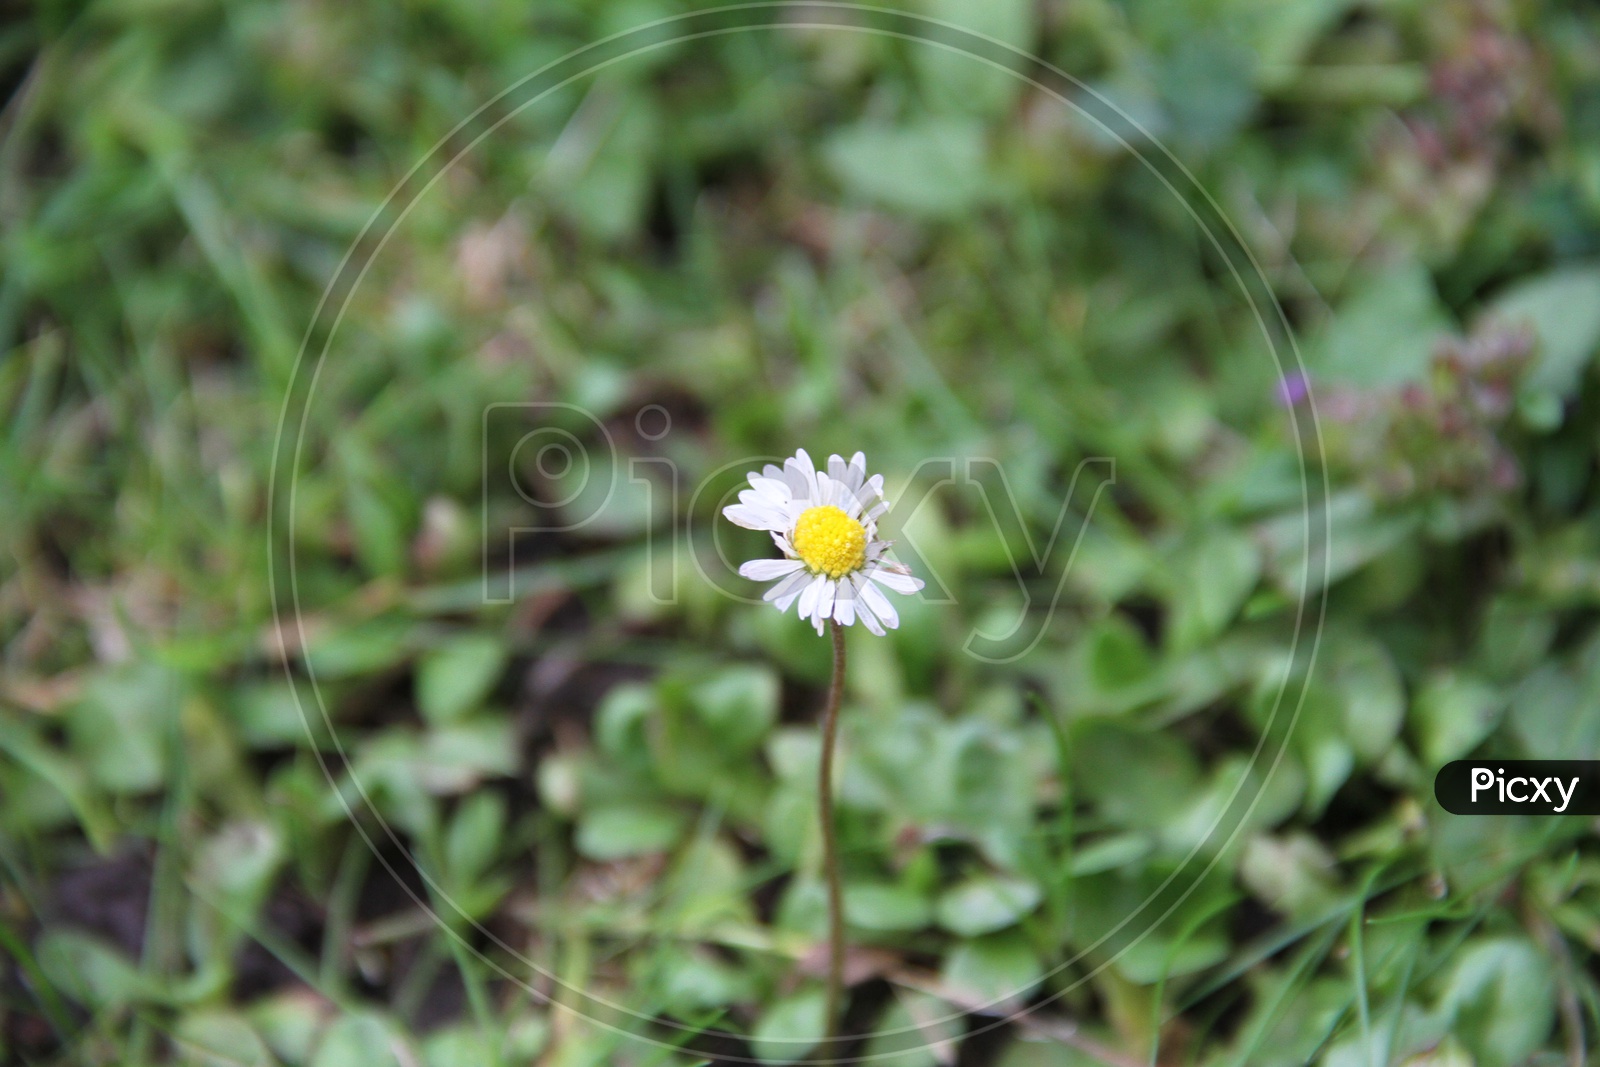 Oxeye Daisy Flower